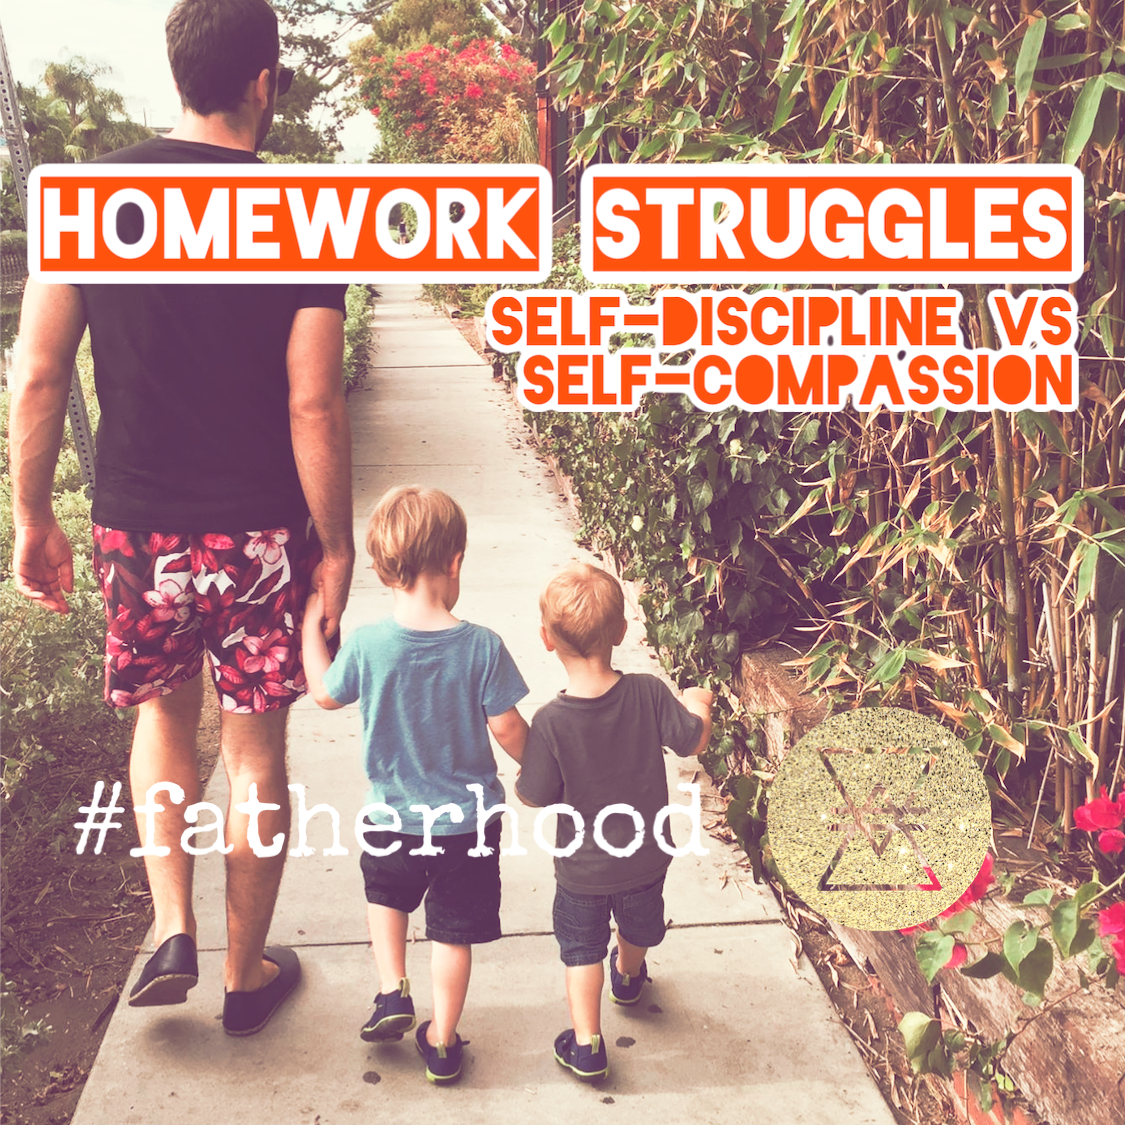 026: Fatherhood odyssey: Homework struggles